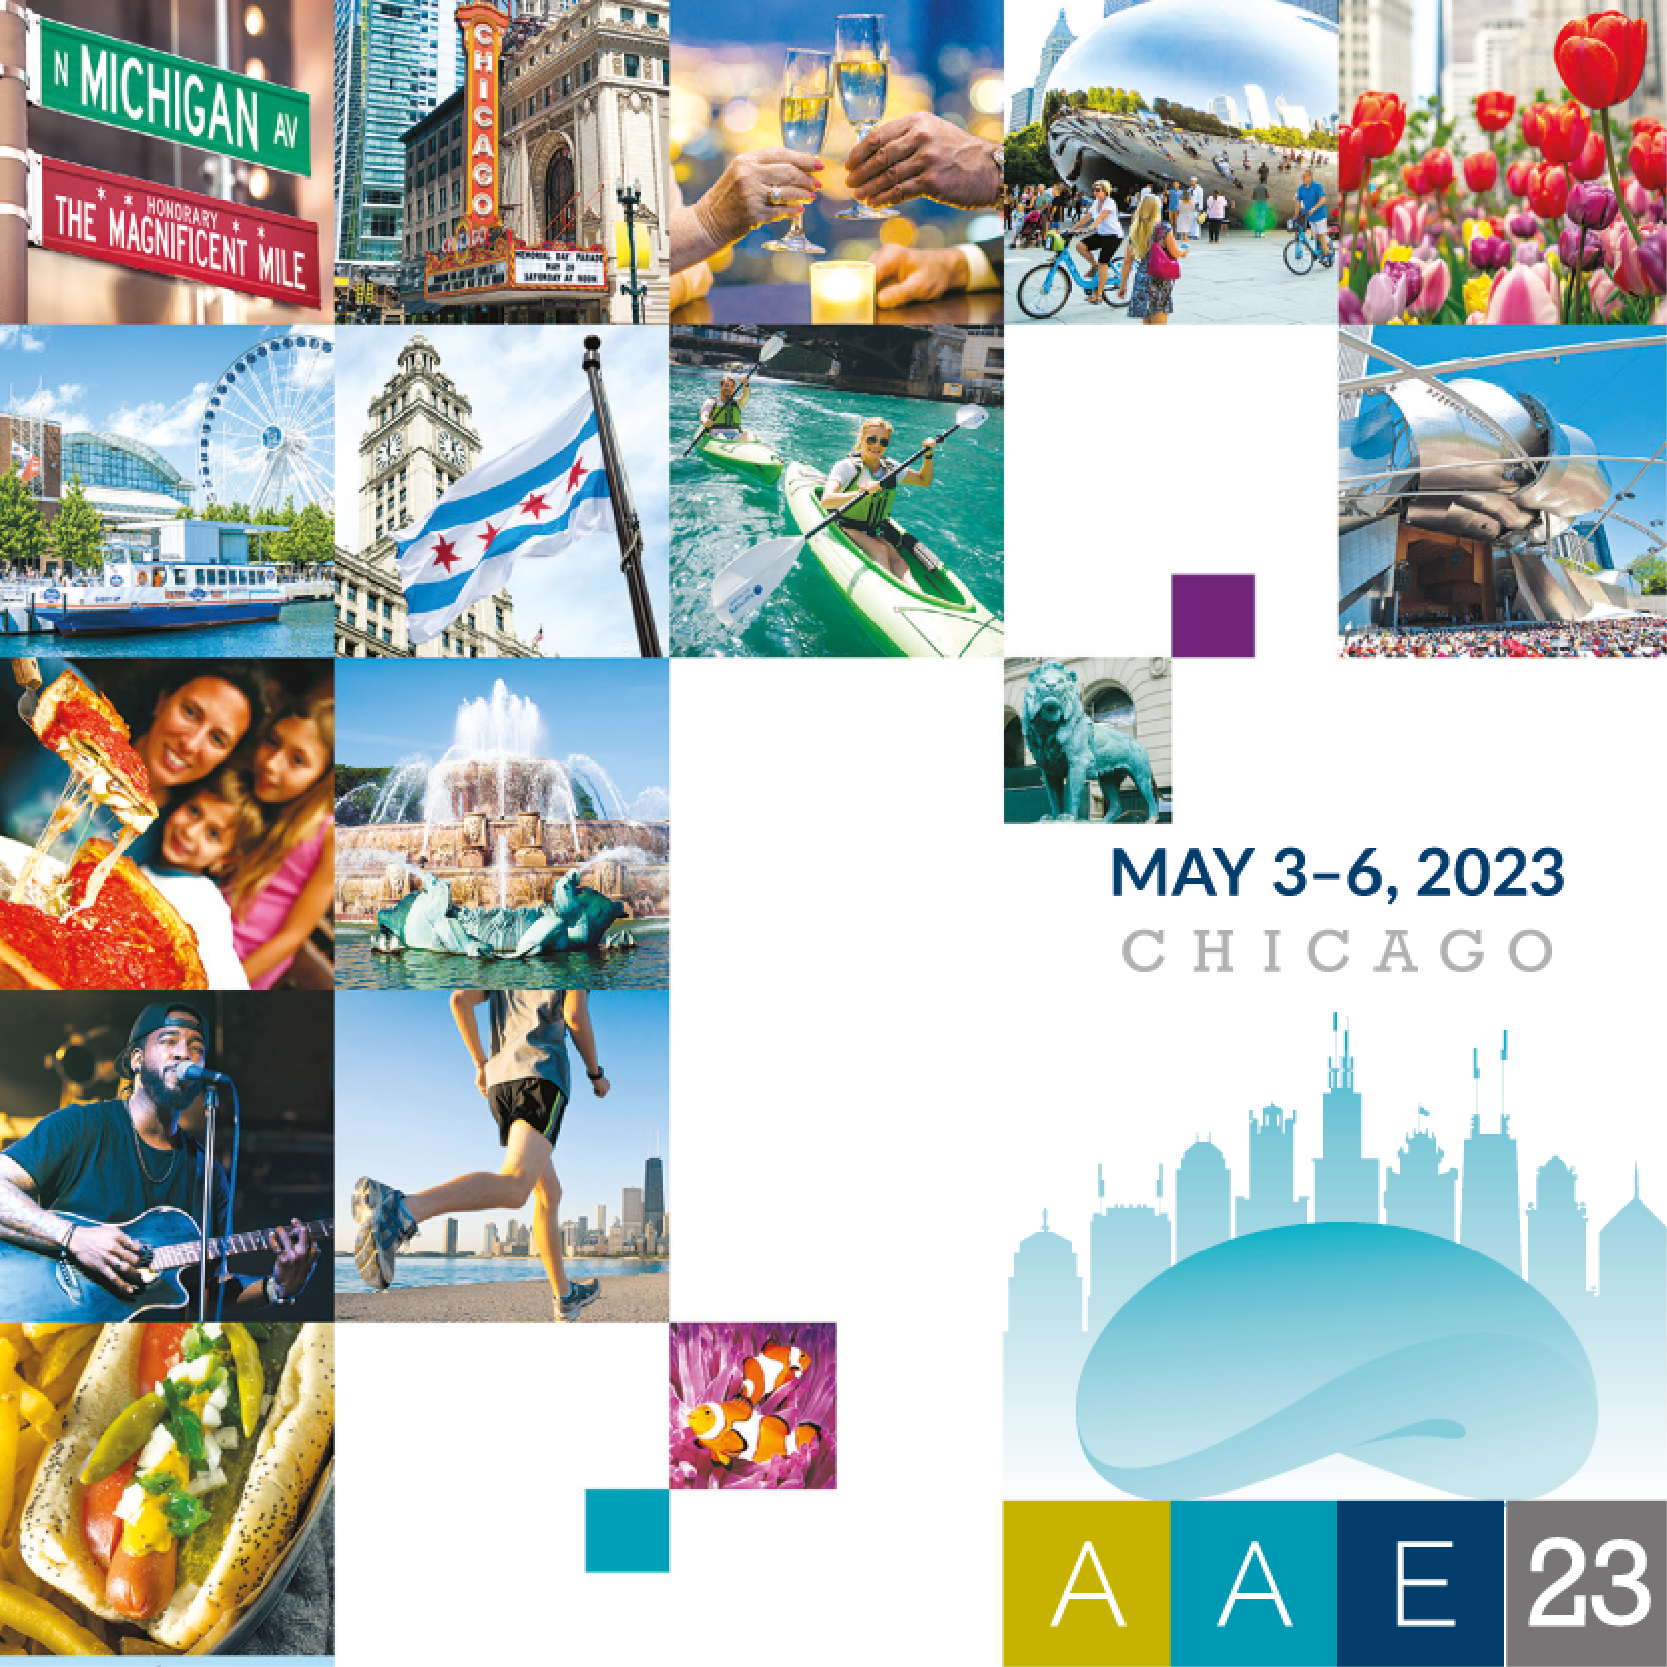 American Association of endodontists Annual Meeting - AAE 2023